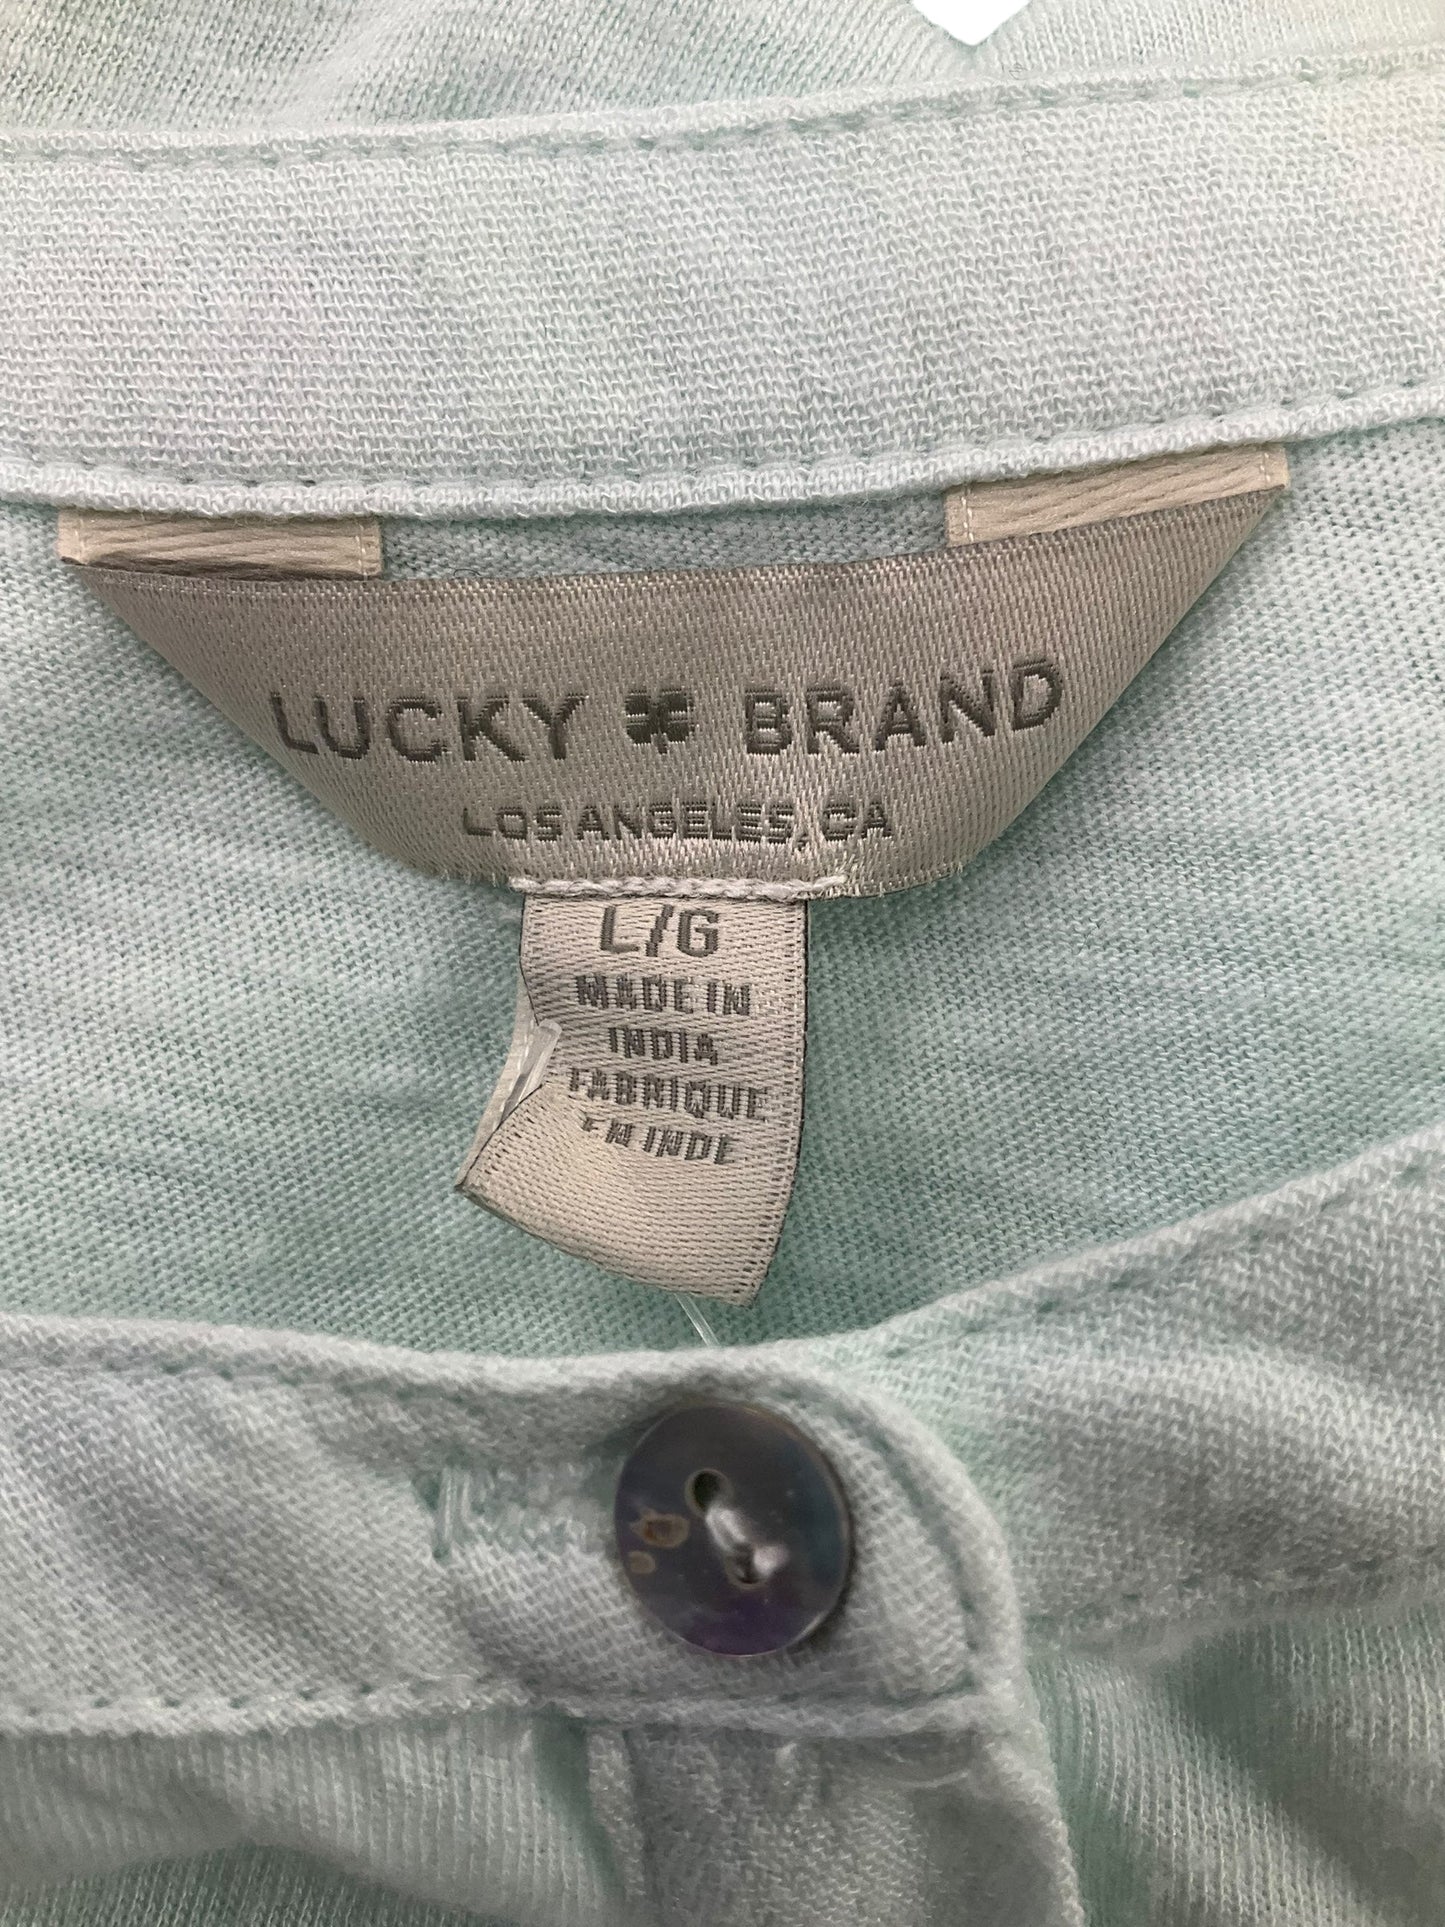 Green Top Short Sleeve Lucky Brand, Size L